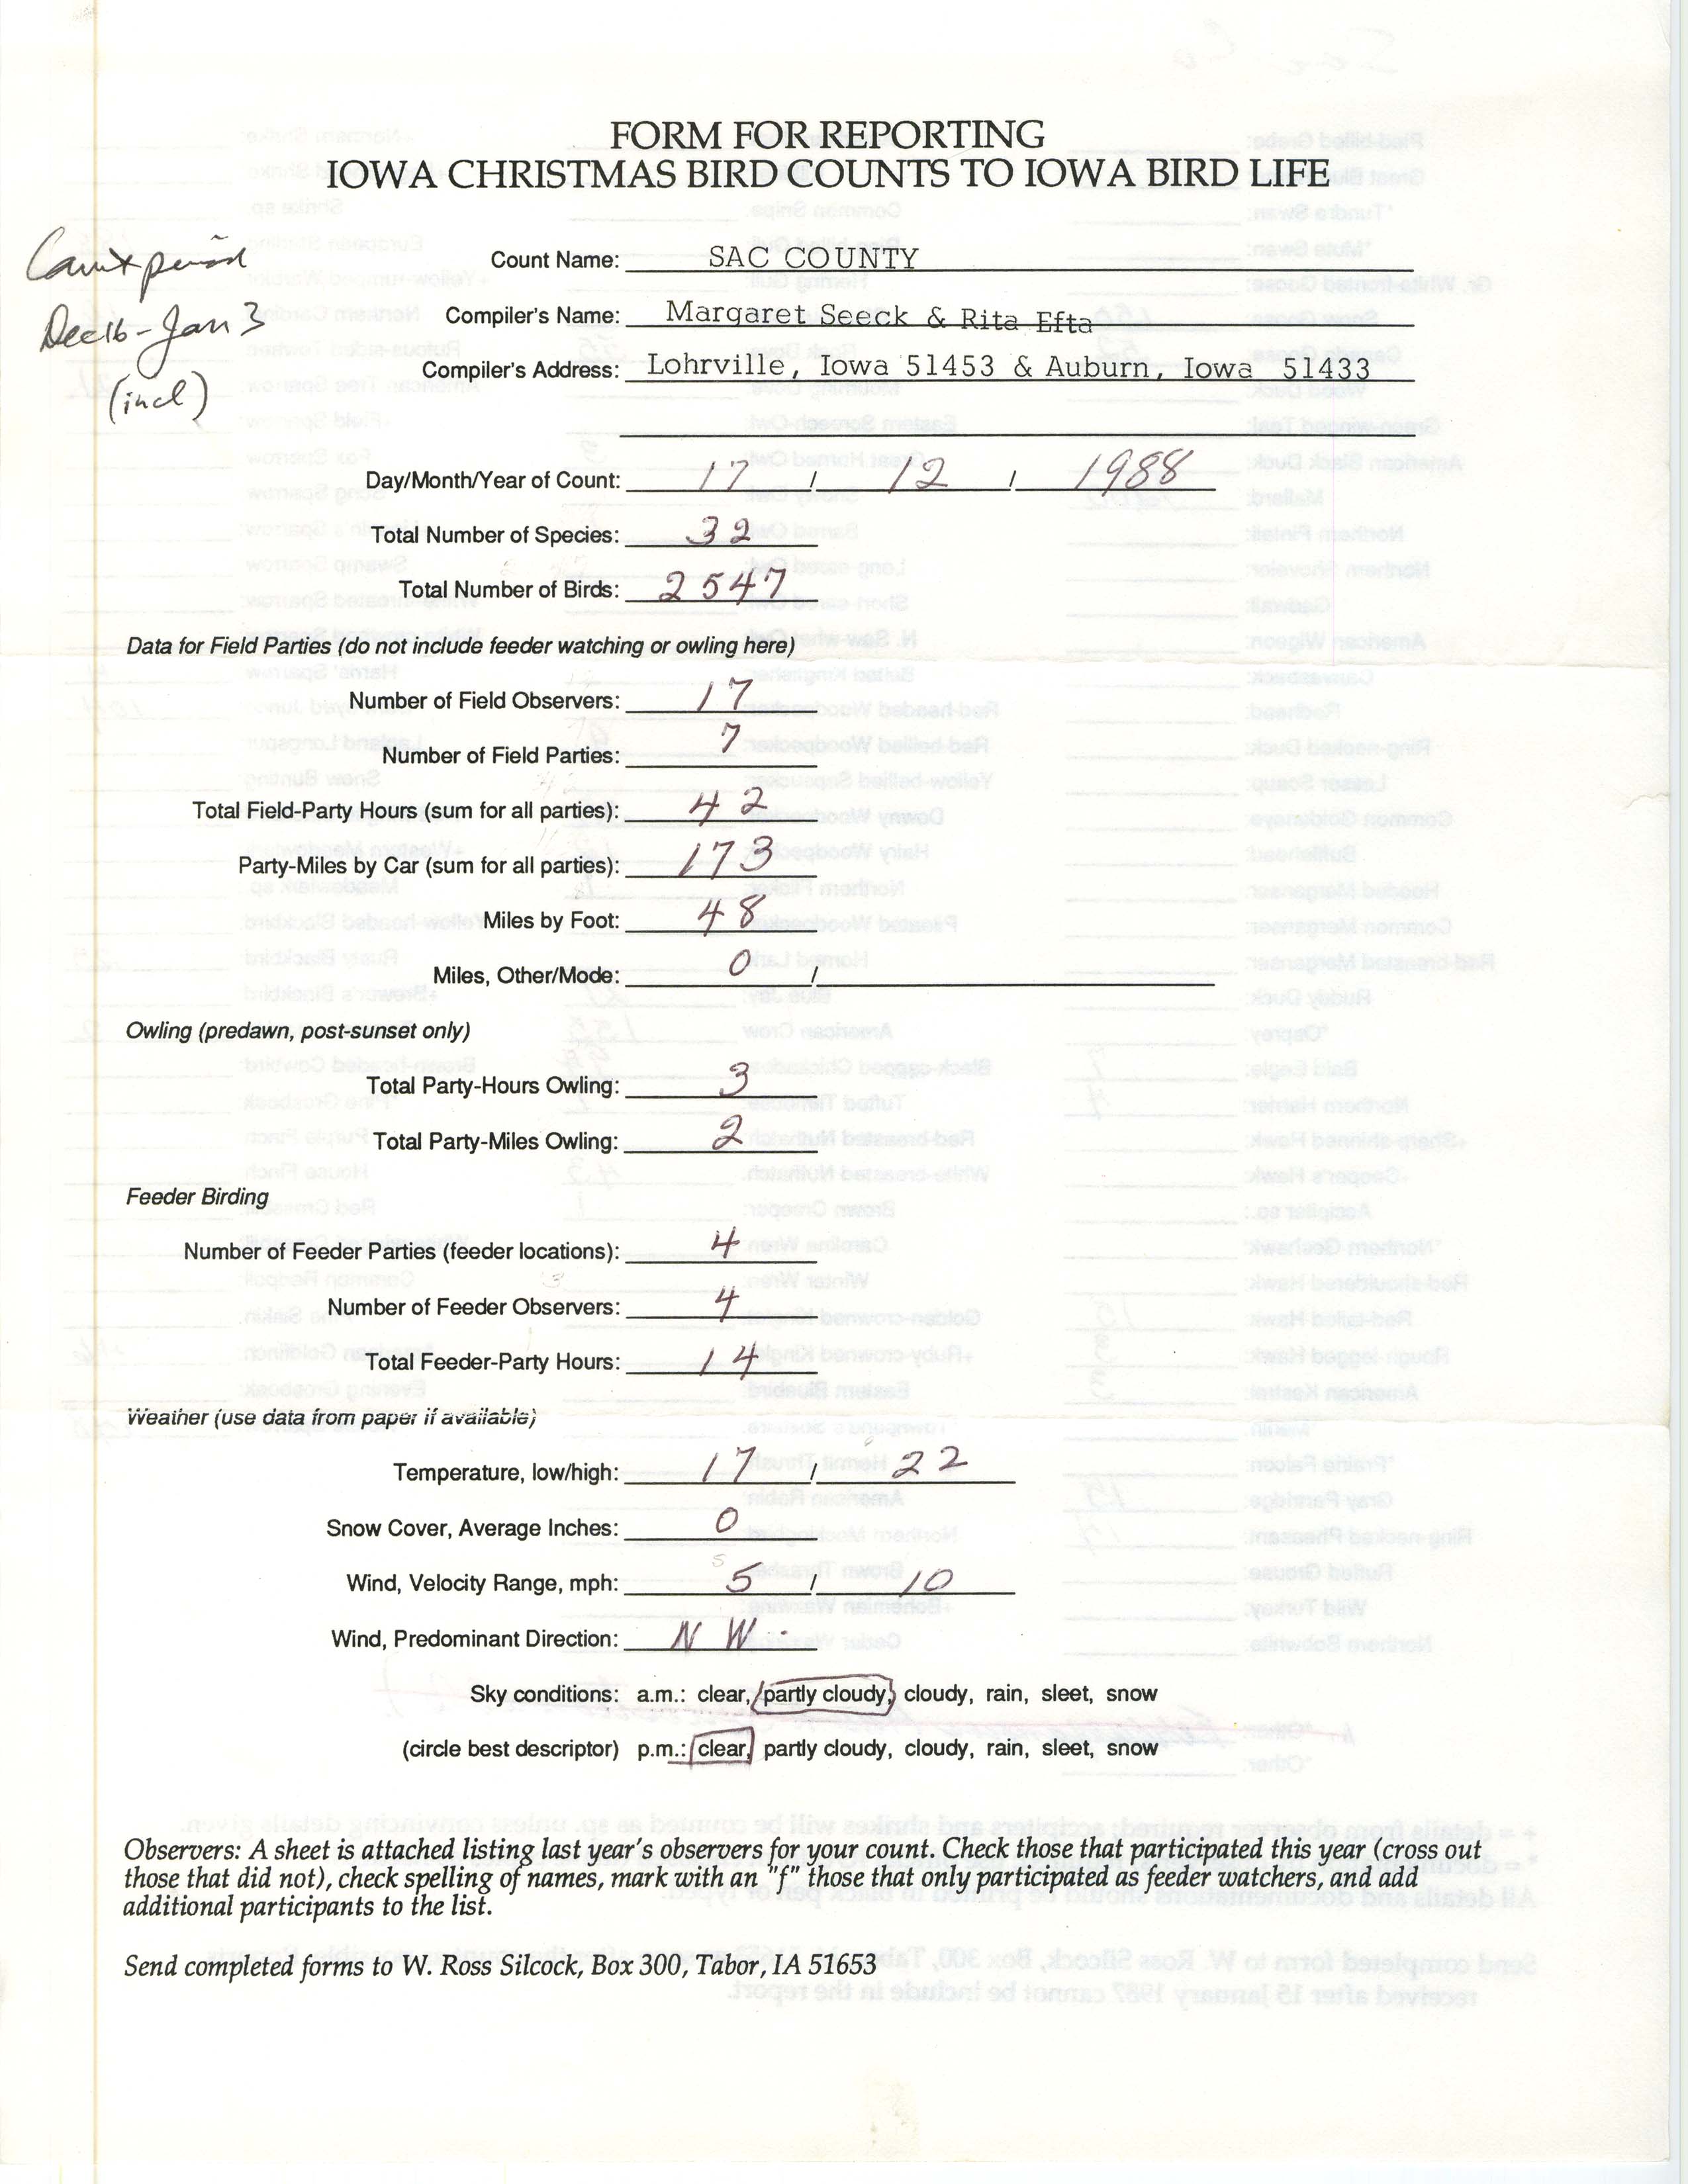 Form for reporting Iowa Christmas bird counts to Iowa Bird Life, Margaret Seeck and Rita E. Efta, December 17, 1988